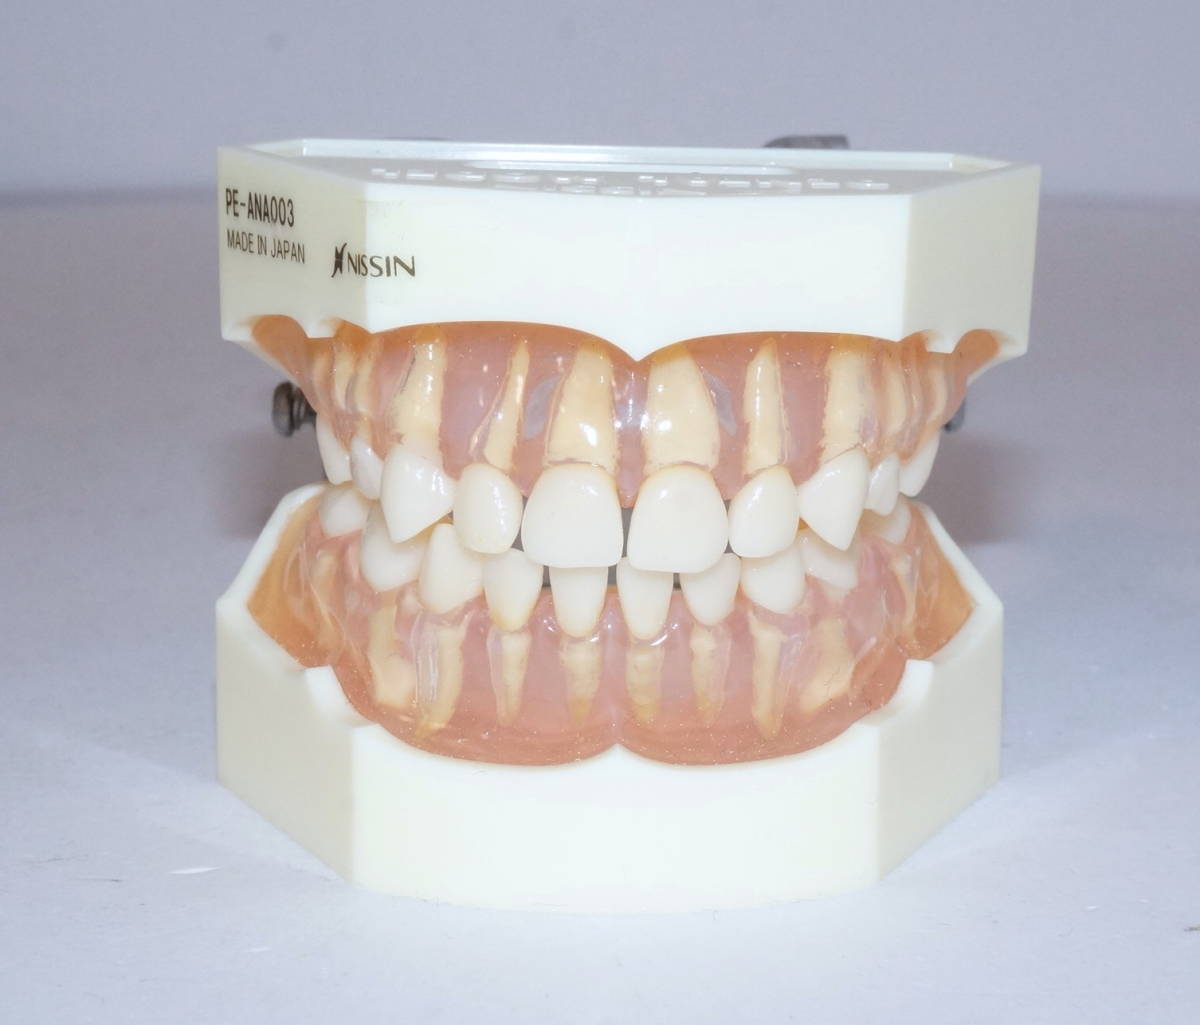 NISSIN 複製歯牙着脱顎模型 乳歯 PE-ANA003 小児 歯科 模型 顎模型 額